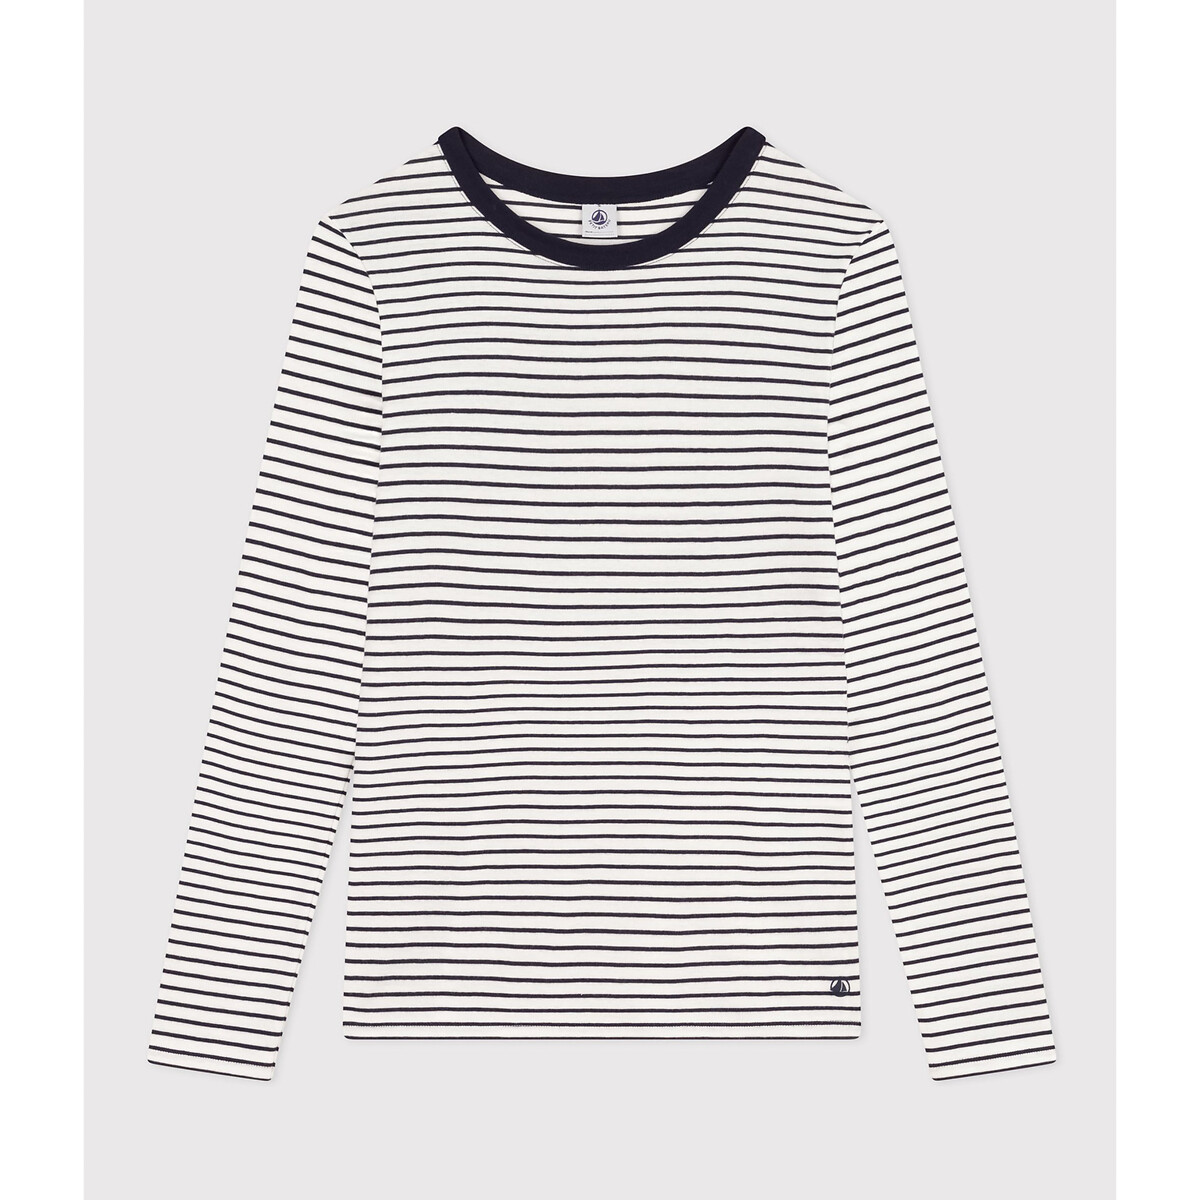 "Iconics" Langarm-Shirt, schmale Streifen von PETIT BATEAU